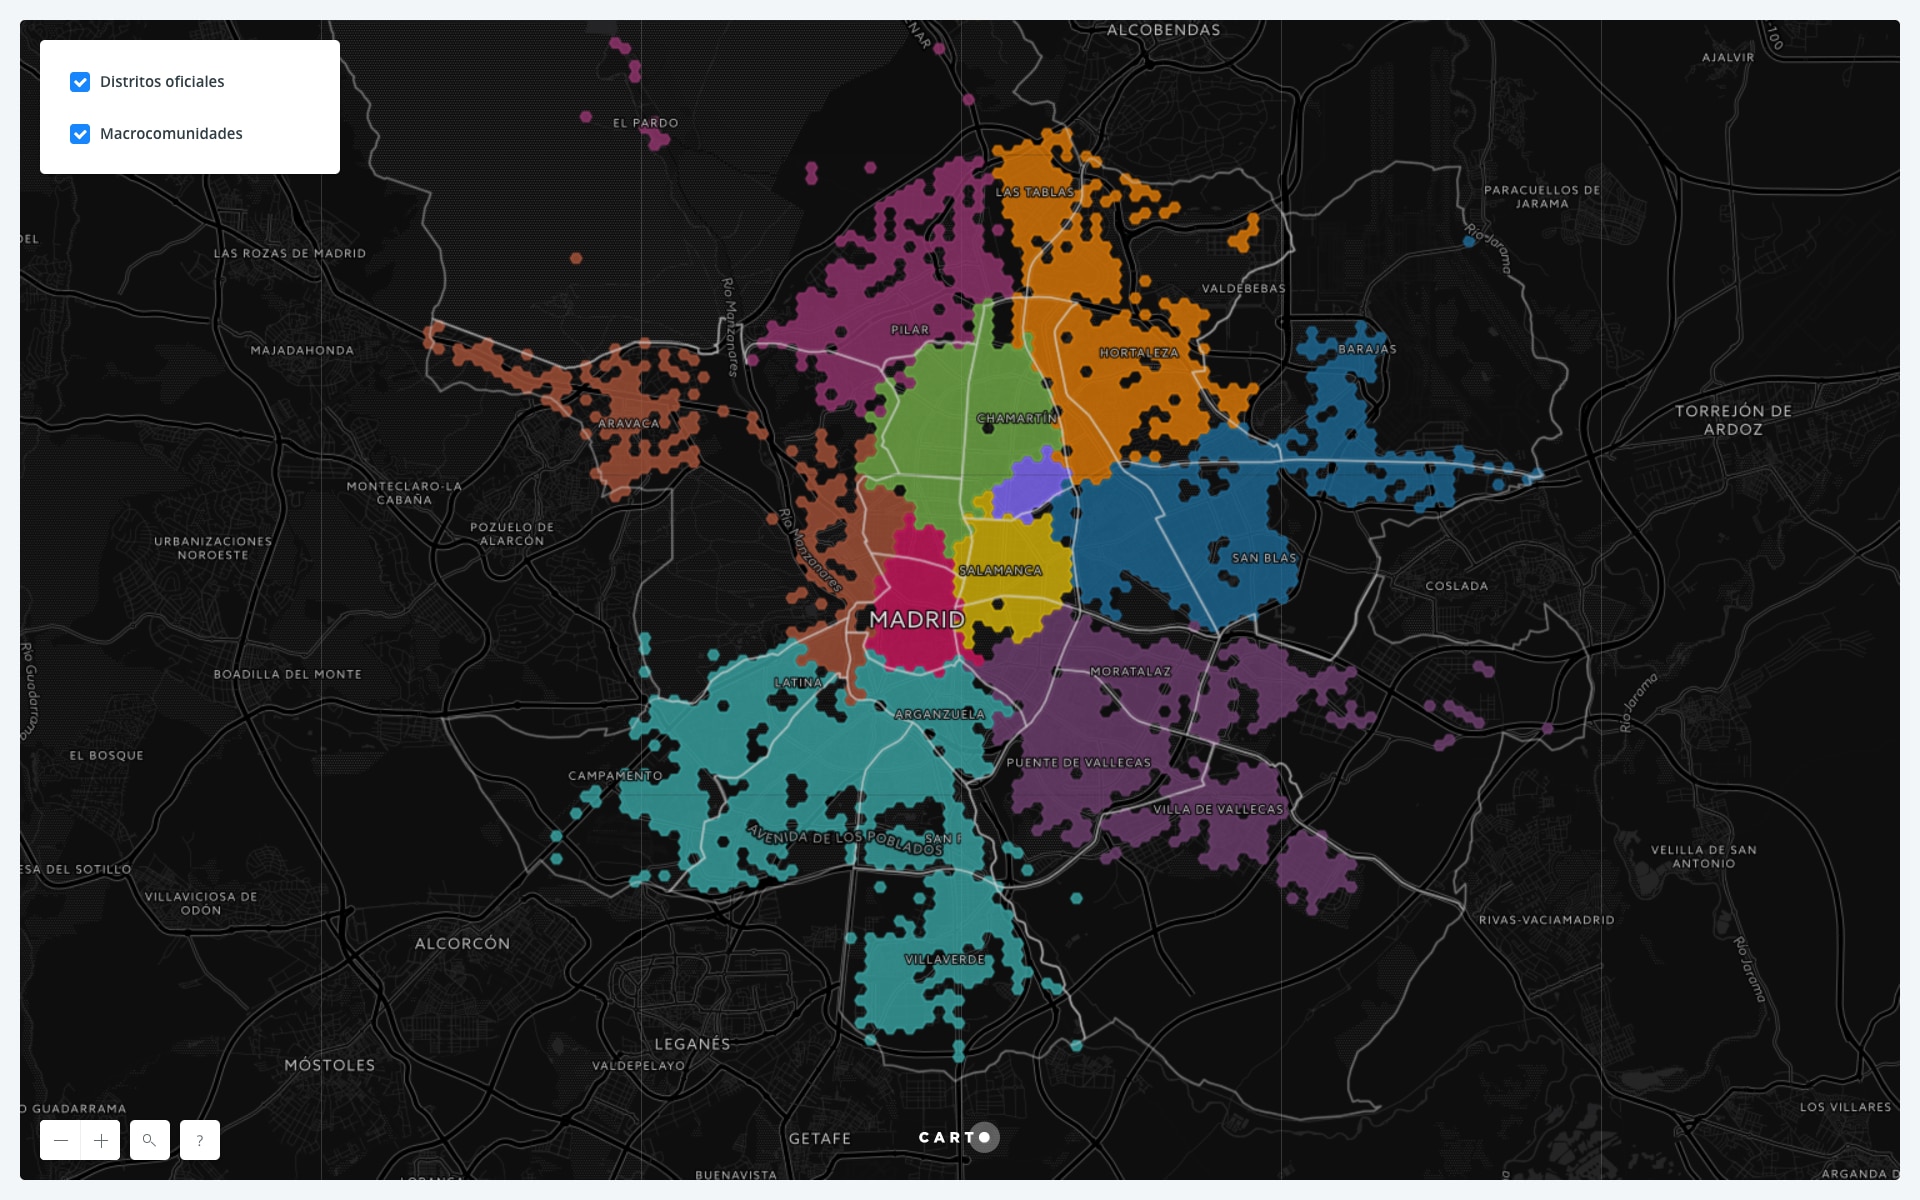 madrid-2-distritos-oficiales-urban-discovery-mapas-ciudades-bbva